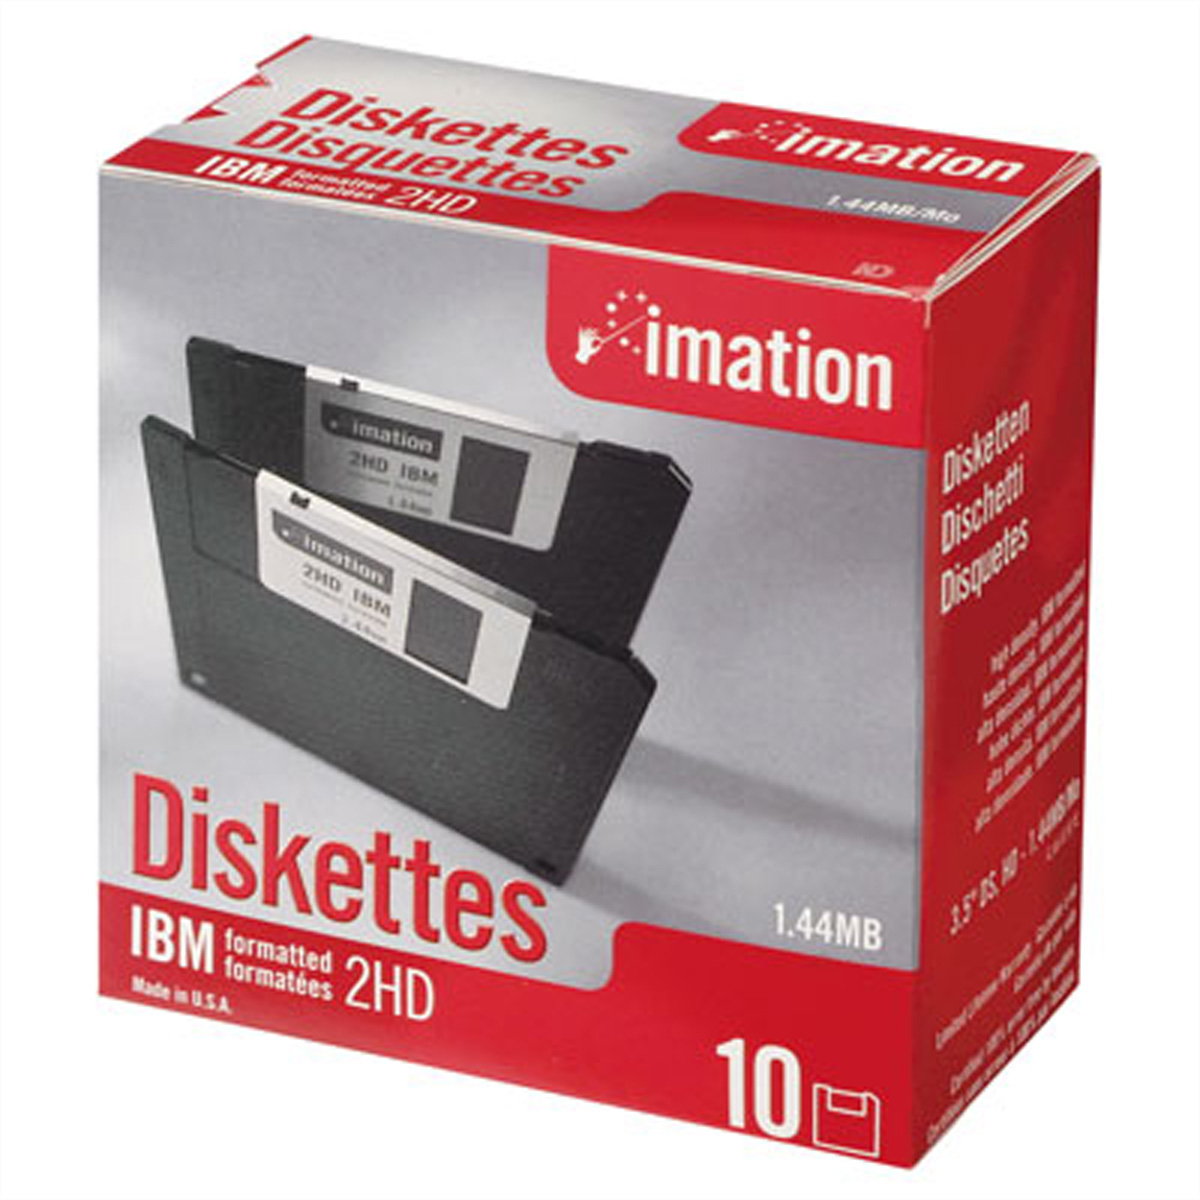 3,5" HD formatierte Disketten, 1,44MB 10er Pack